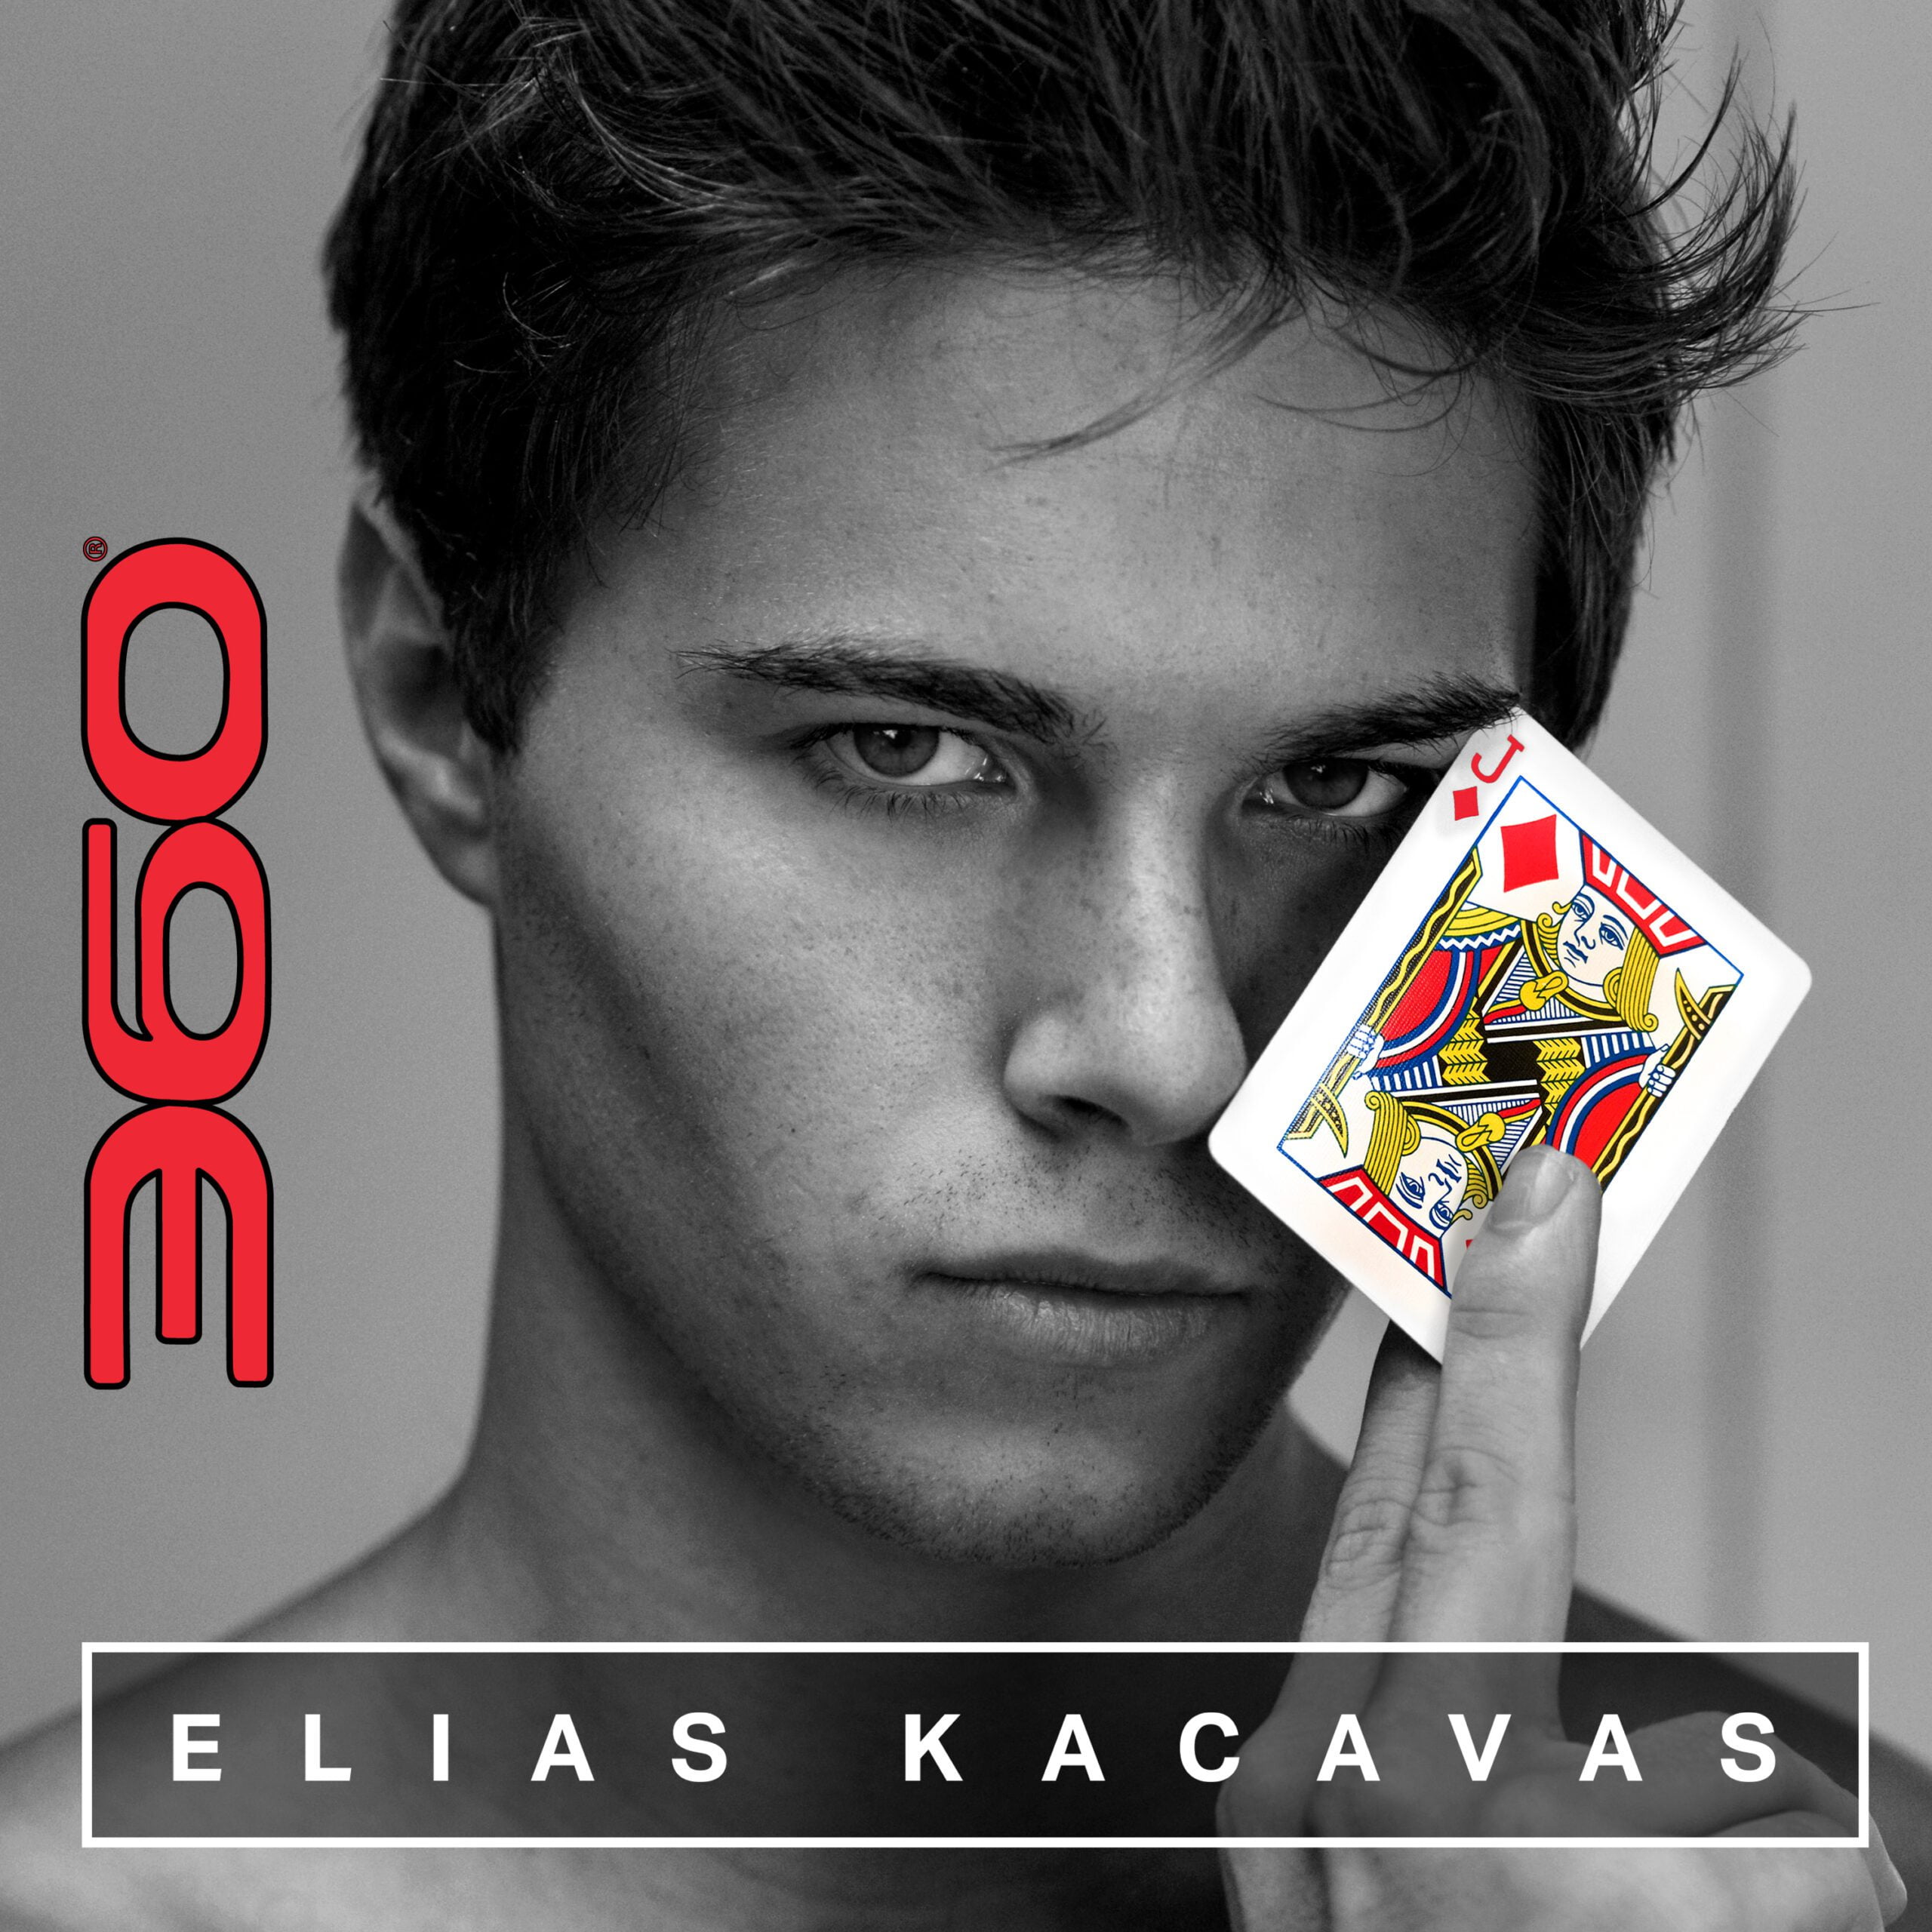 Actor/model Elias Kacavas (Euphoria, Pretty Little Liars, My Big Fat Greek Wedding) graces the cover of 360 MAGAZINE as an Emerging Person.